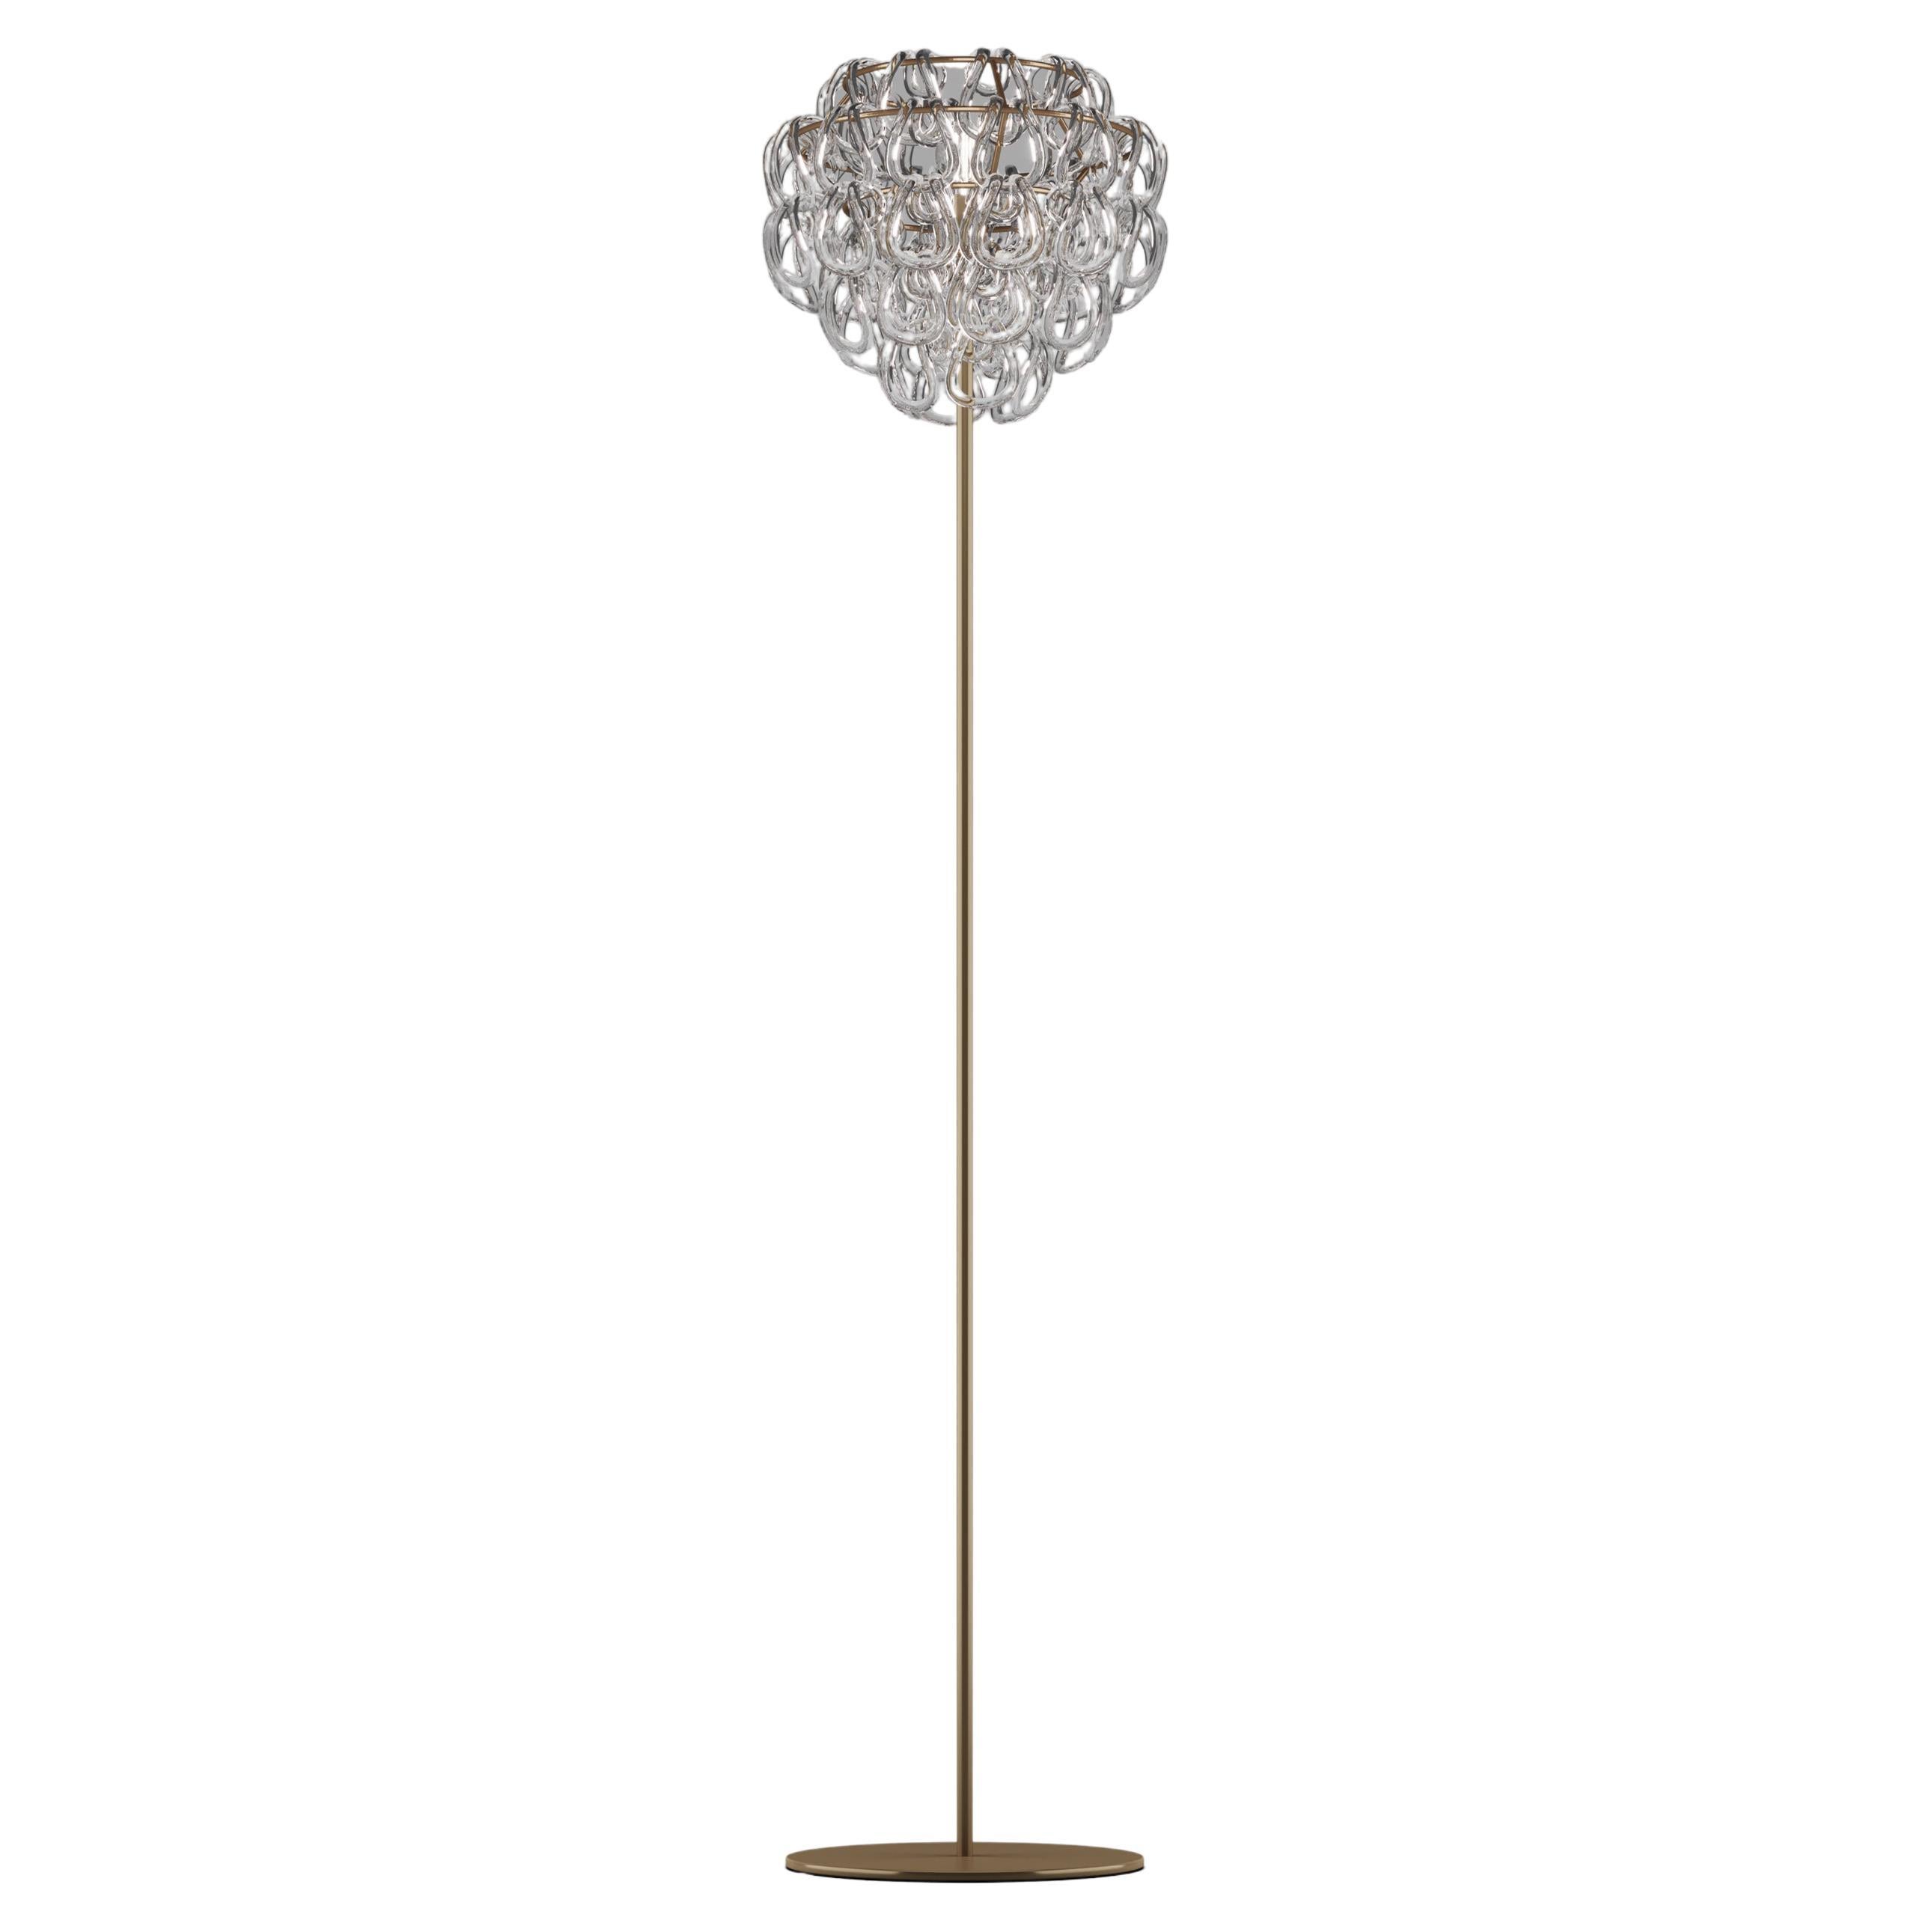 Vistosi Giogali Floor Lamp in Crystal Transparent with Matt Bronze Frame